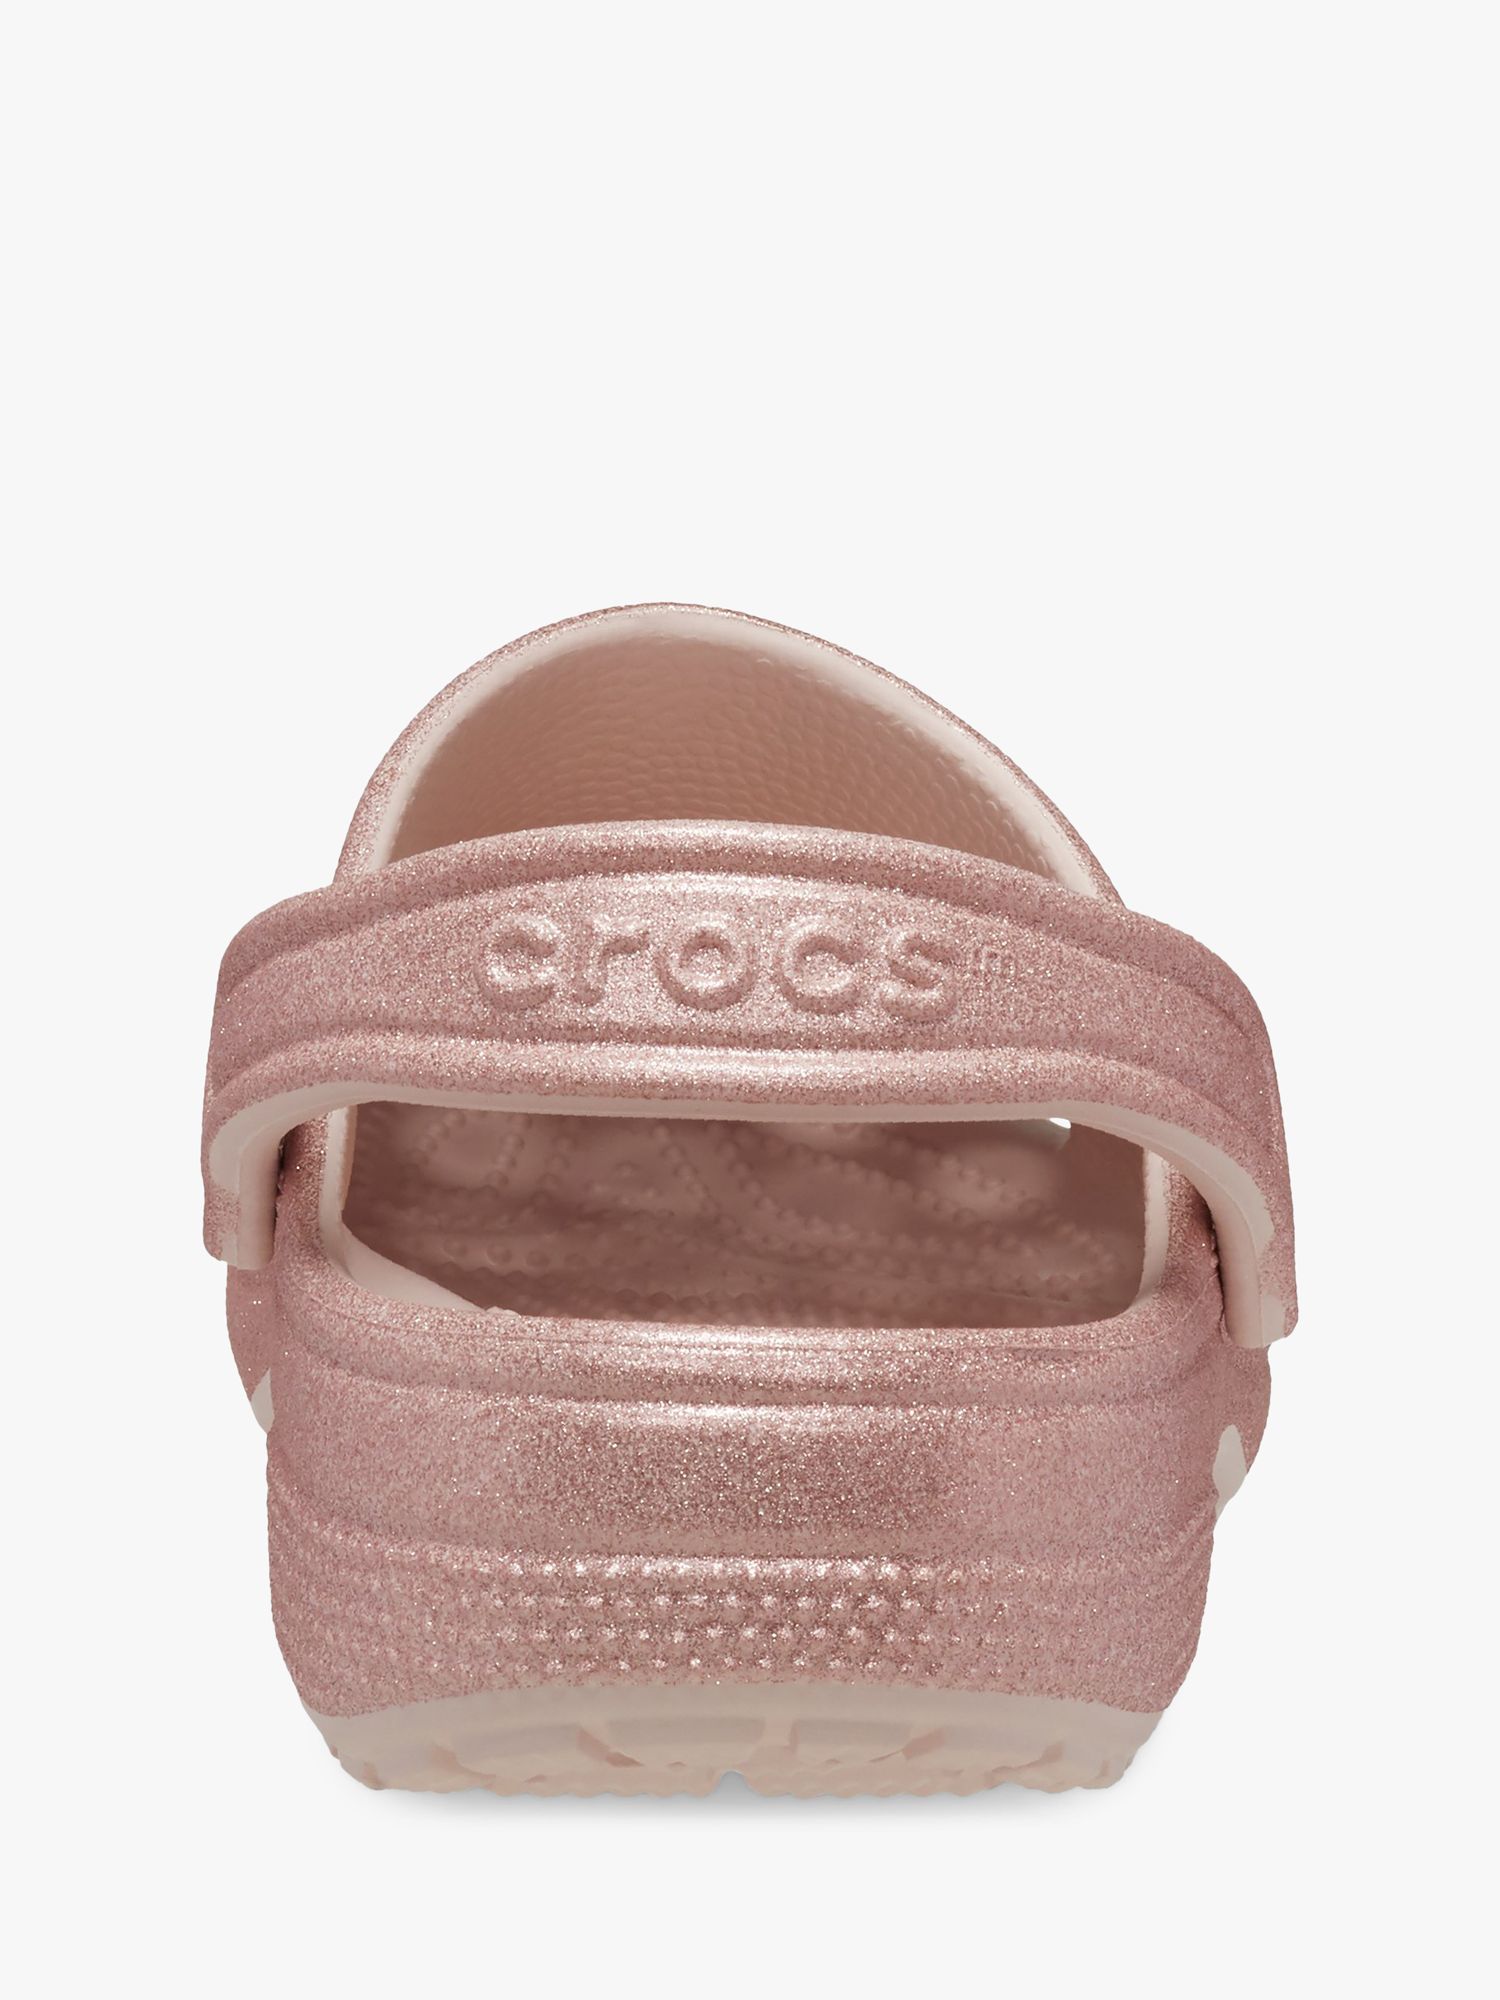 Crocs Classic Glitter Clogs, Light Pink, 5